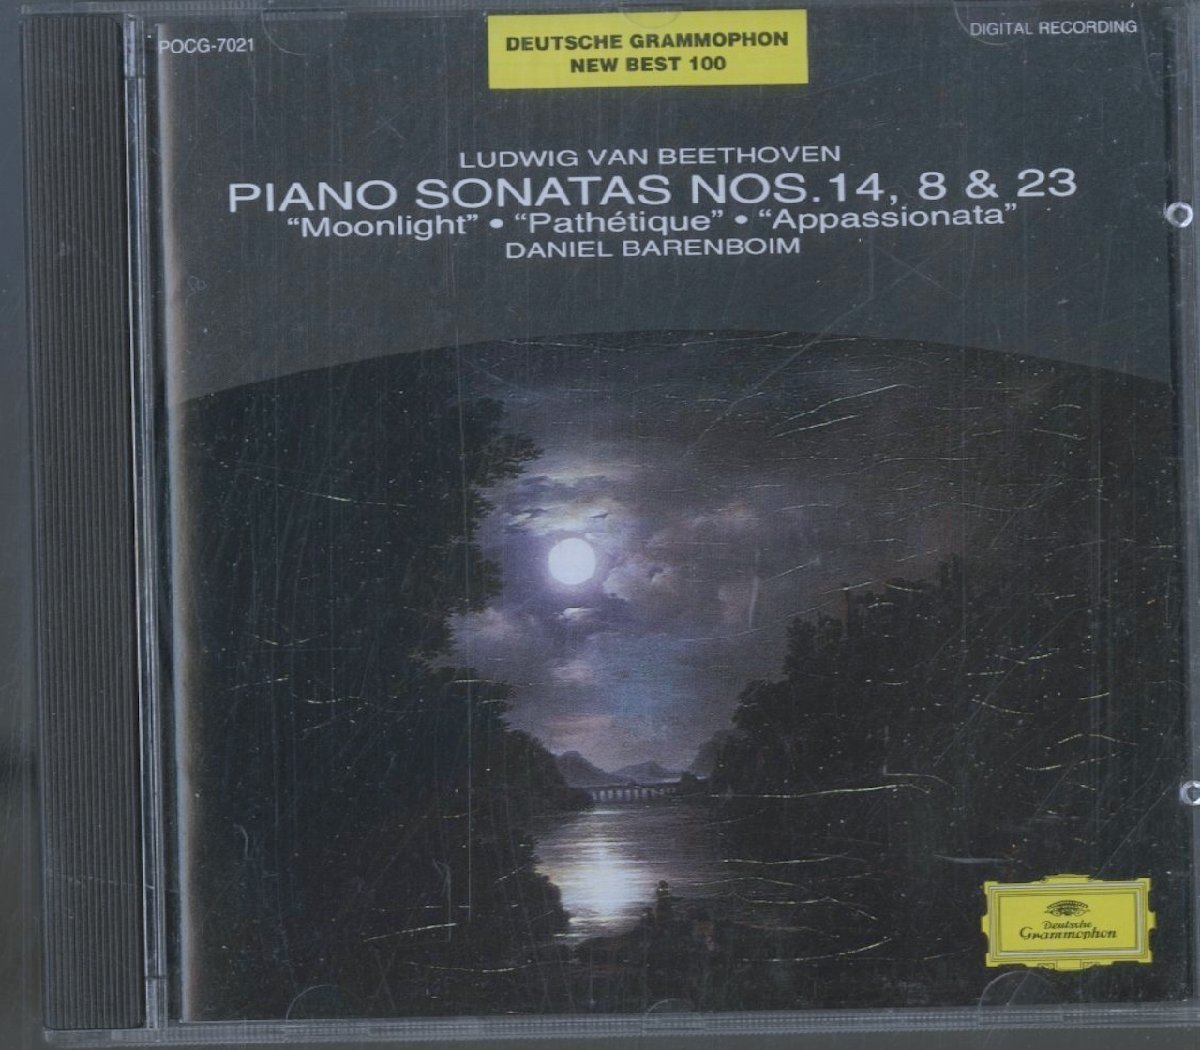 CD / バレンボイム / ベートーヴェン：ピアノ・ソナタ第14番「月光」、第8番「悲愴」、第23番「情熱」 / 国内盤 POCG-7021_画像1